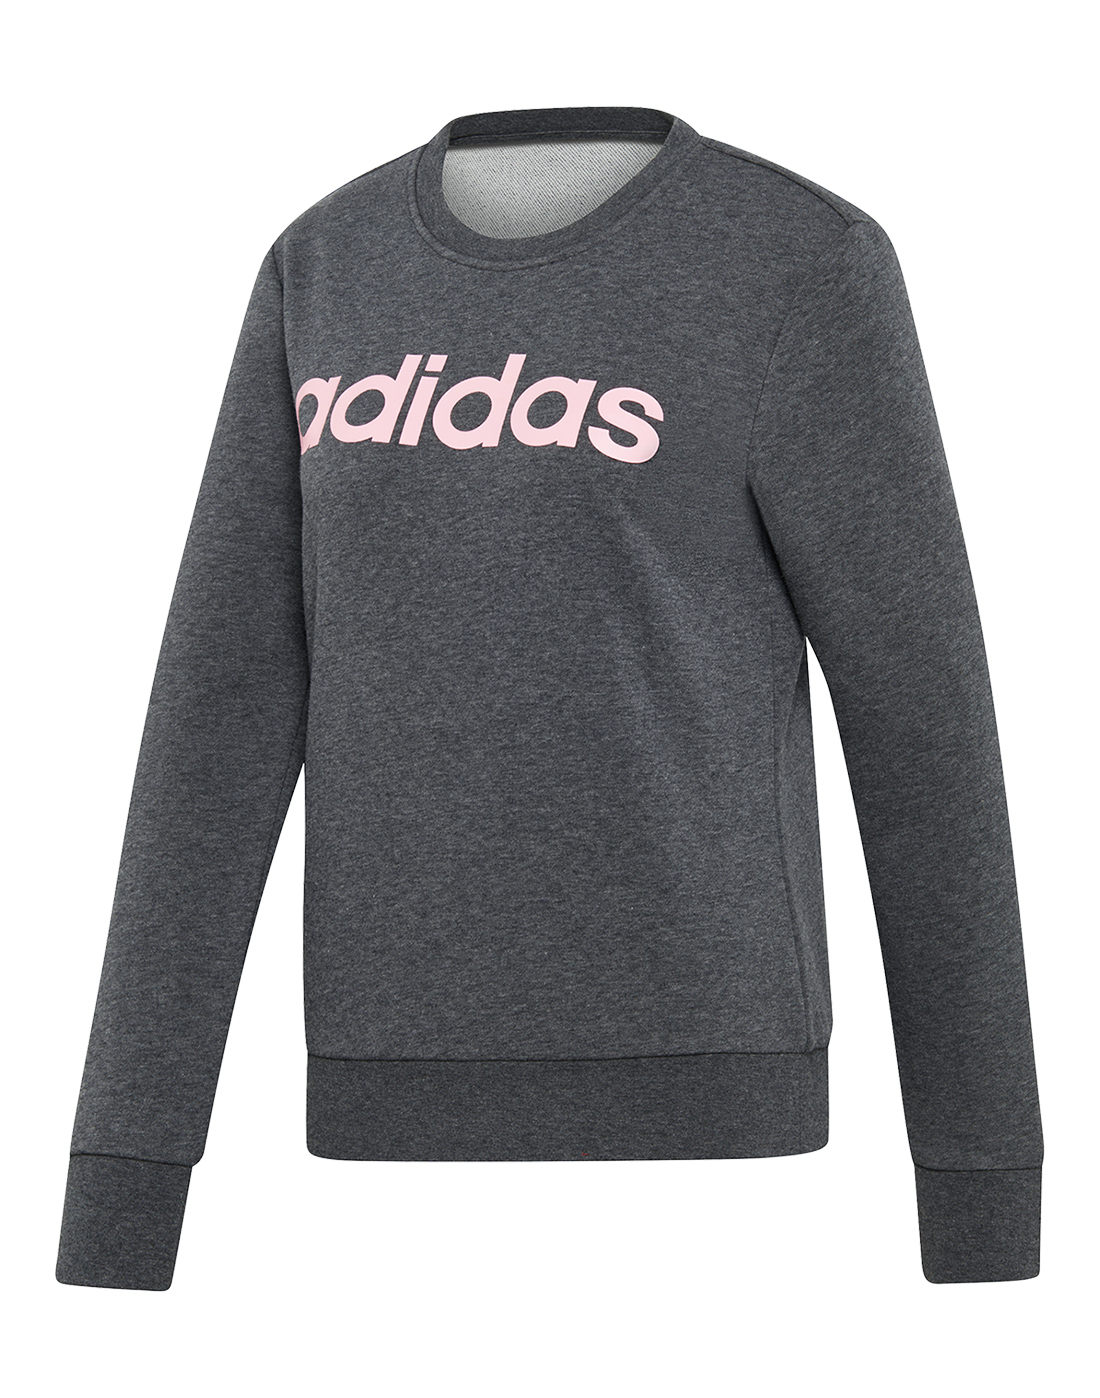 Women S Grey Pink Adidas Sweatshirt Life Style Sports